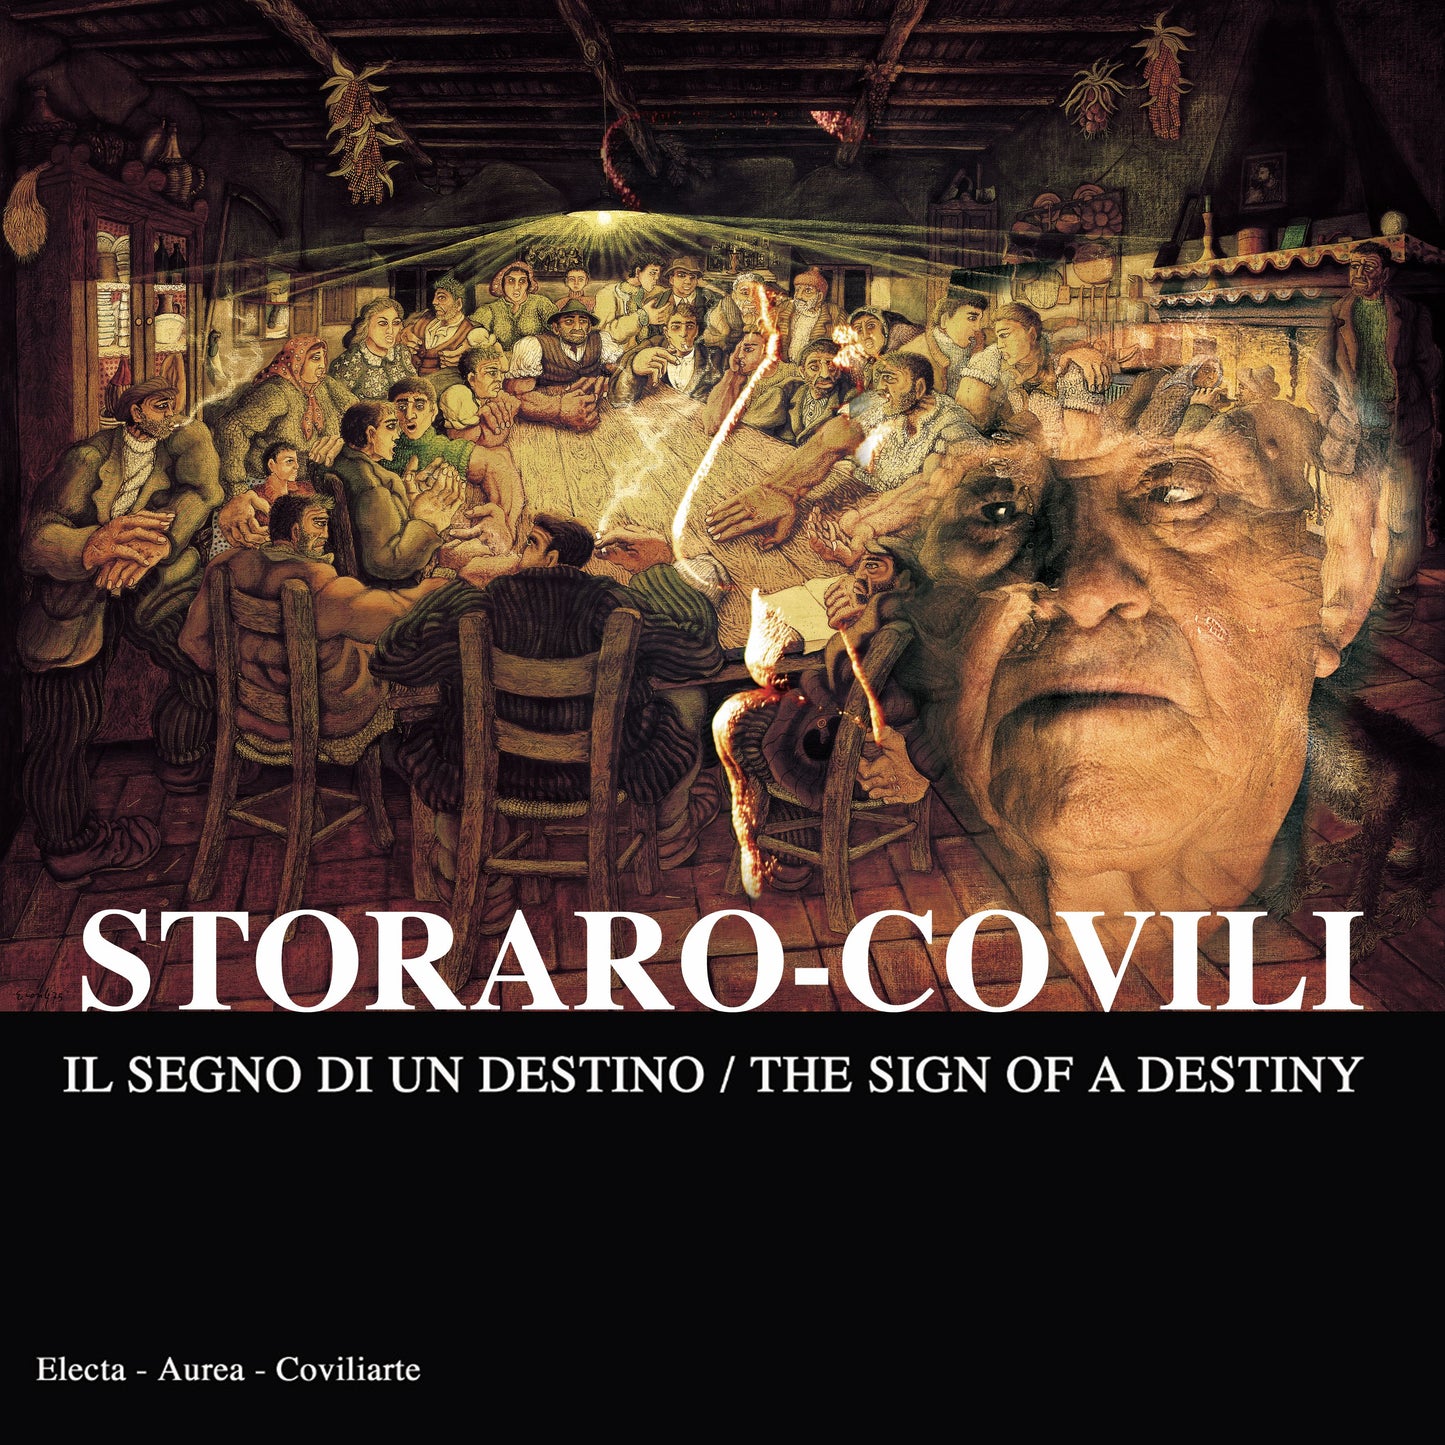 Storaro-Covili  "The Sign of a Destiny"